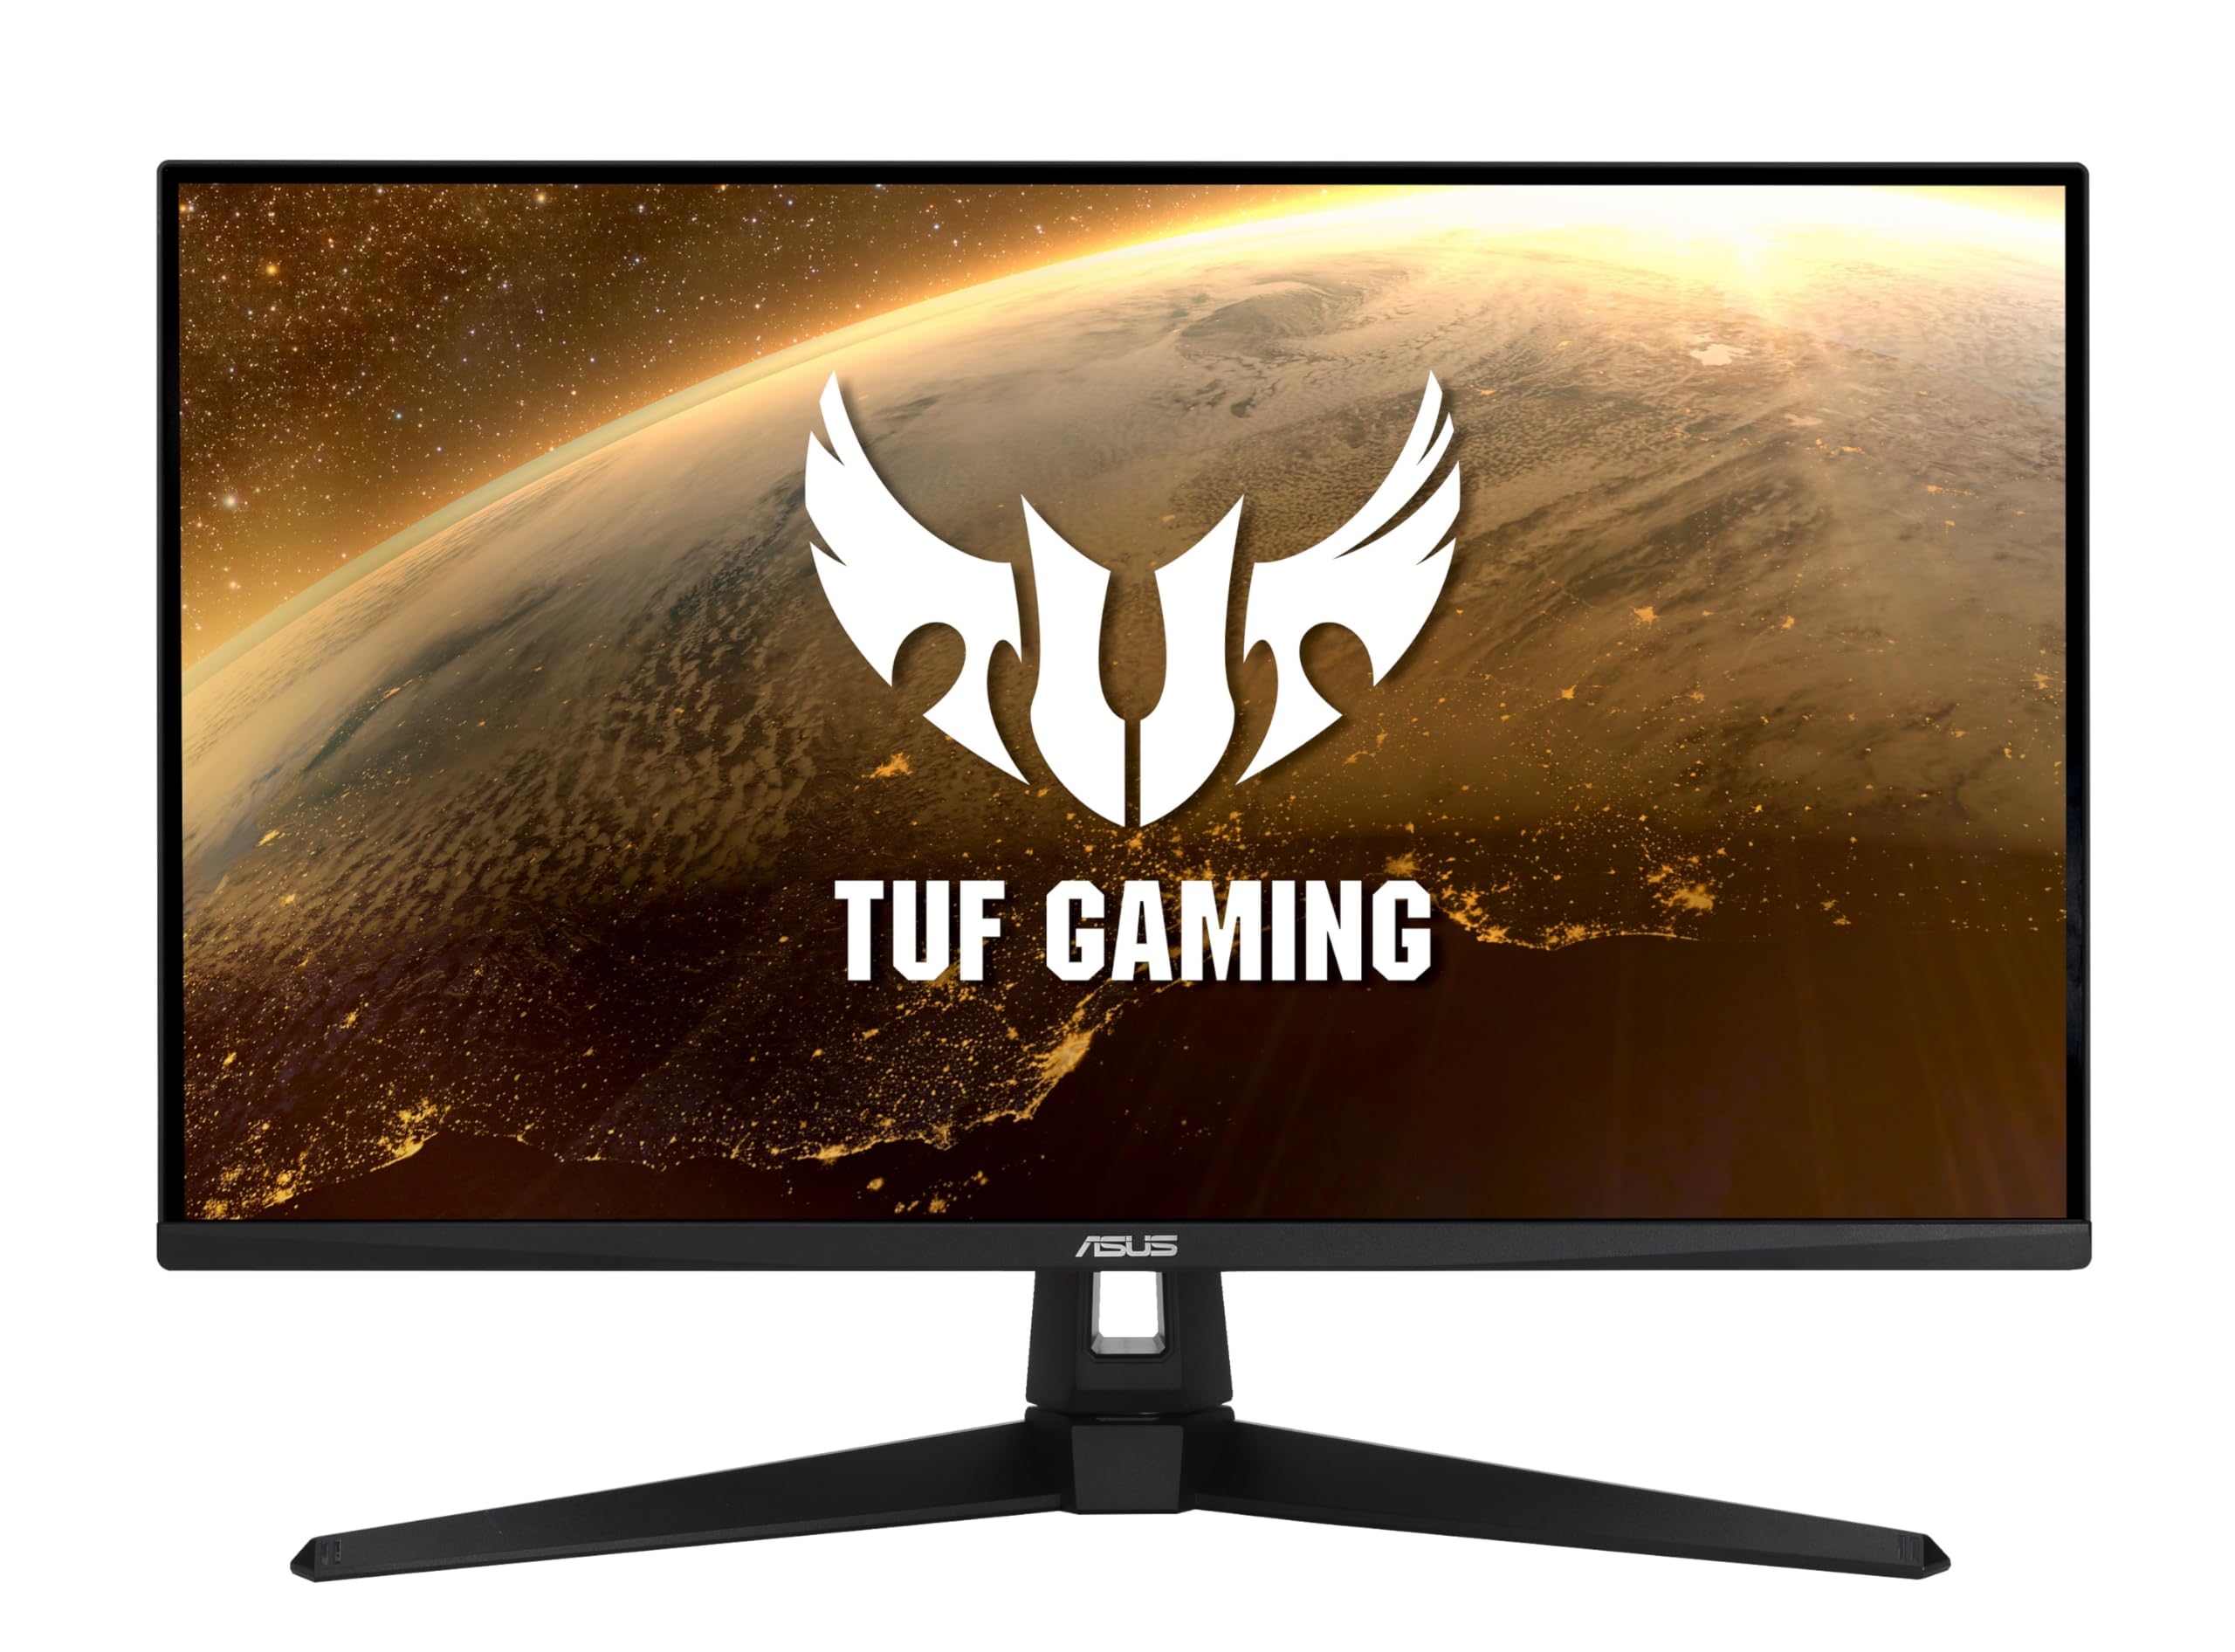 ASUS TUF Gaming VG289Q1A - 28 Zoll UHD 4K Monitor - 60 Hz, 5ms GtG, FreeSync, HDR 10 - IPS Panel, 16:9, 3840x2160, DisplayPort, HDMI